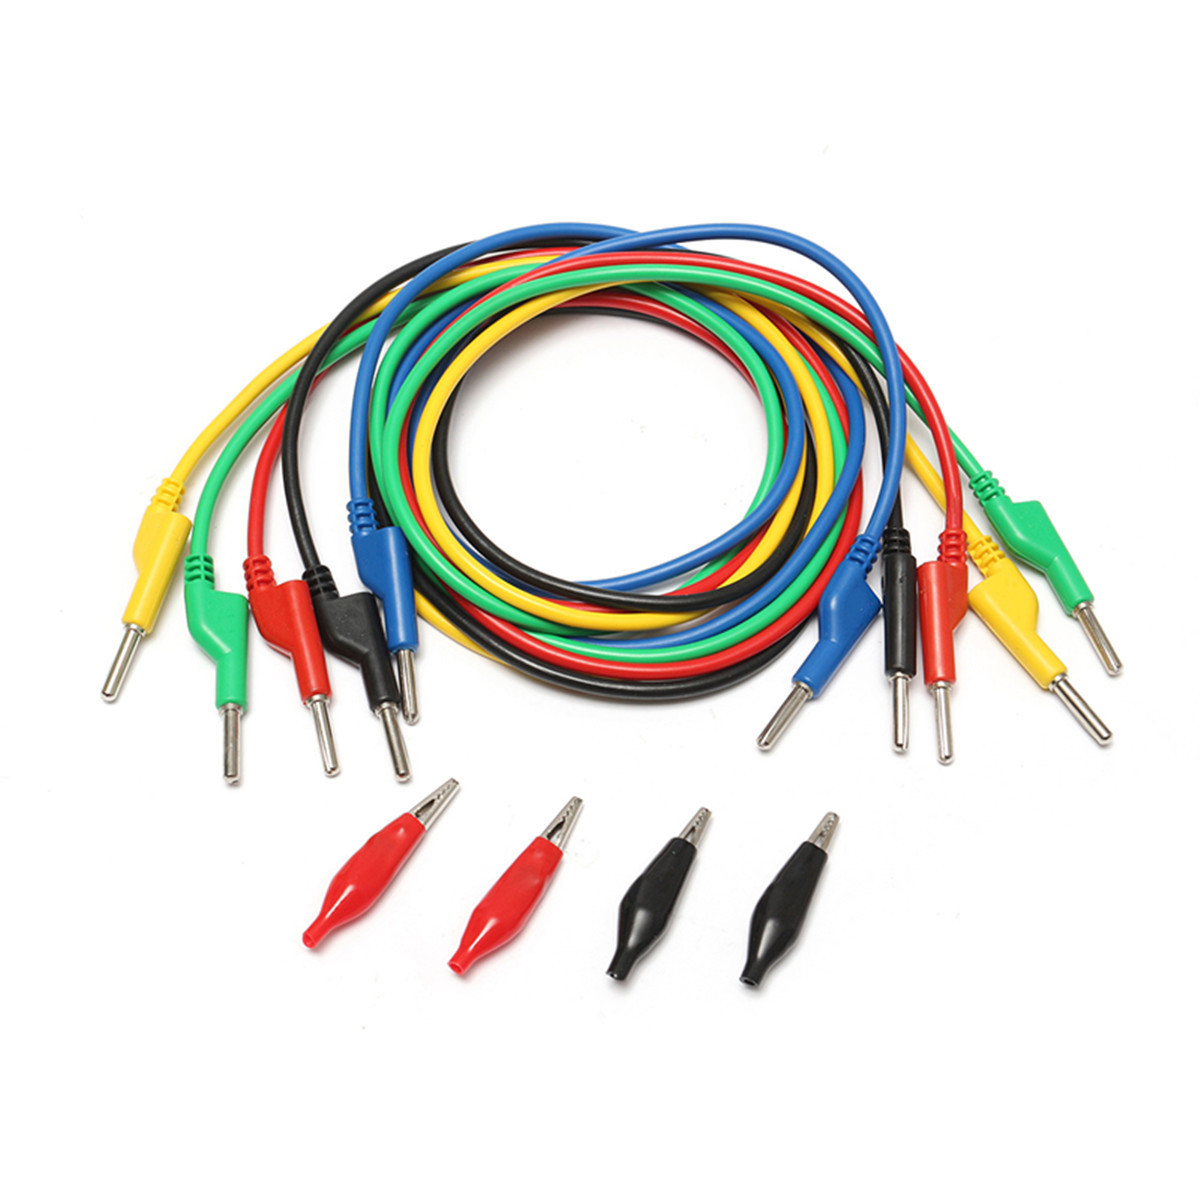 DANIU-5Pcs-5-Colors-Silicone-Banana-to-Banana-Plugs-Test-Probe-Leads-Cable-1157614-1